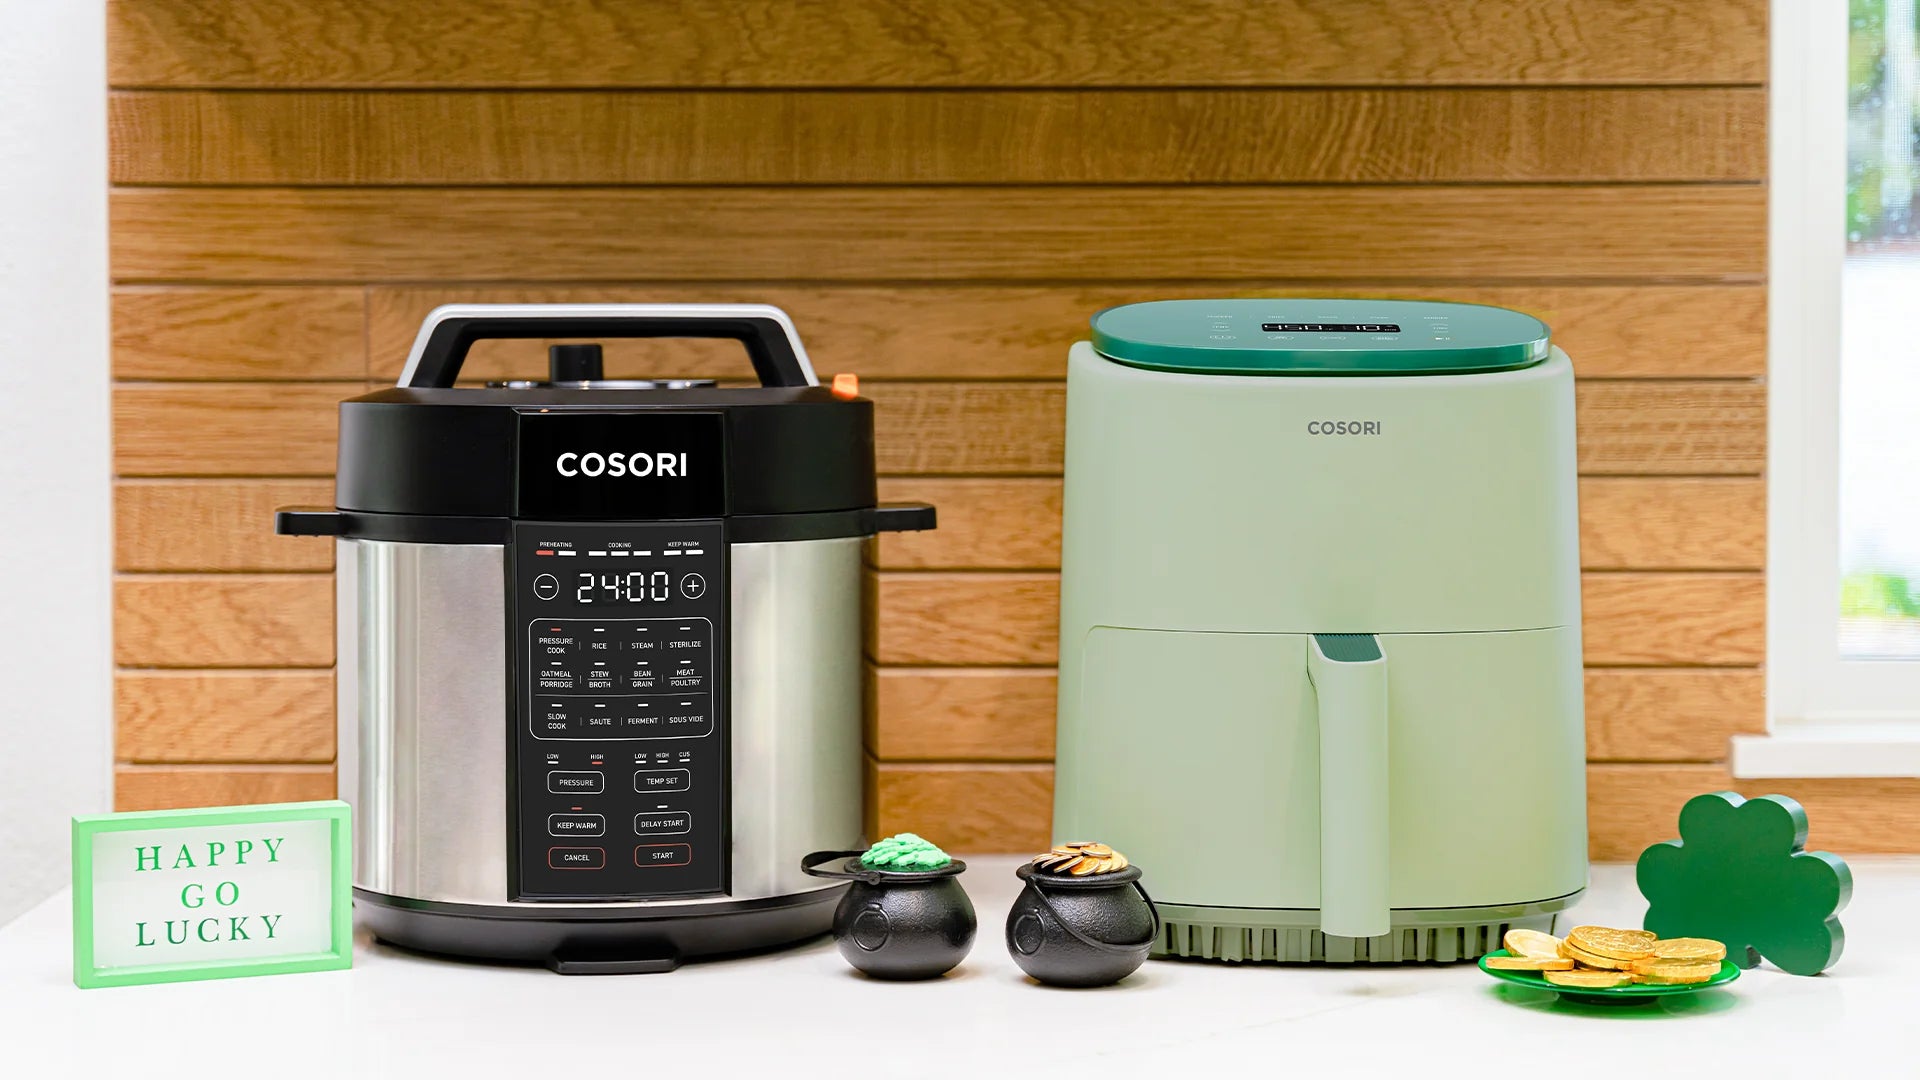 COSORI, Premier Home Cooking Essentials Brand, Announces Launch of